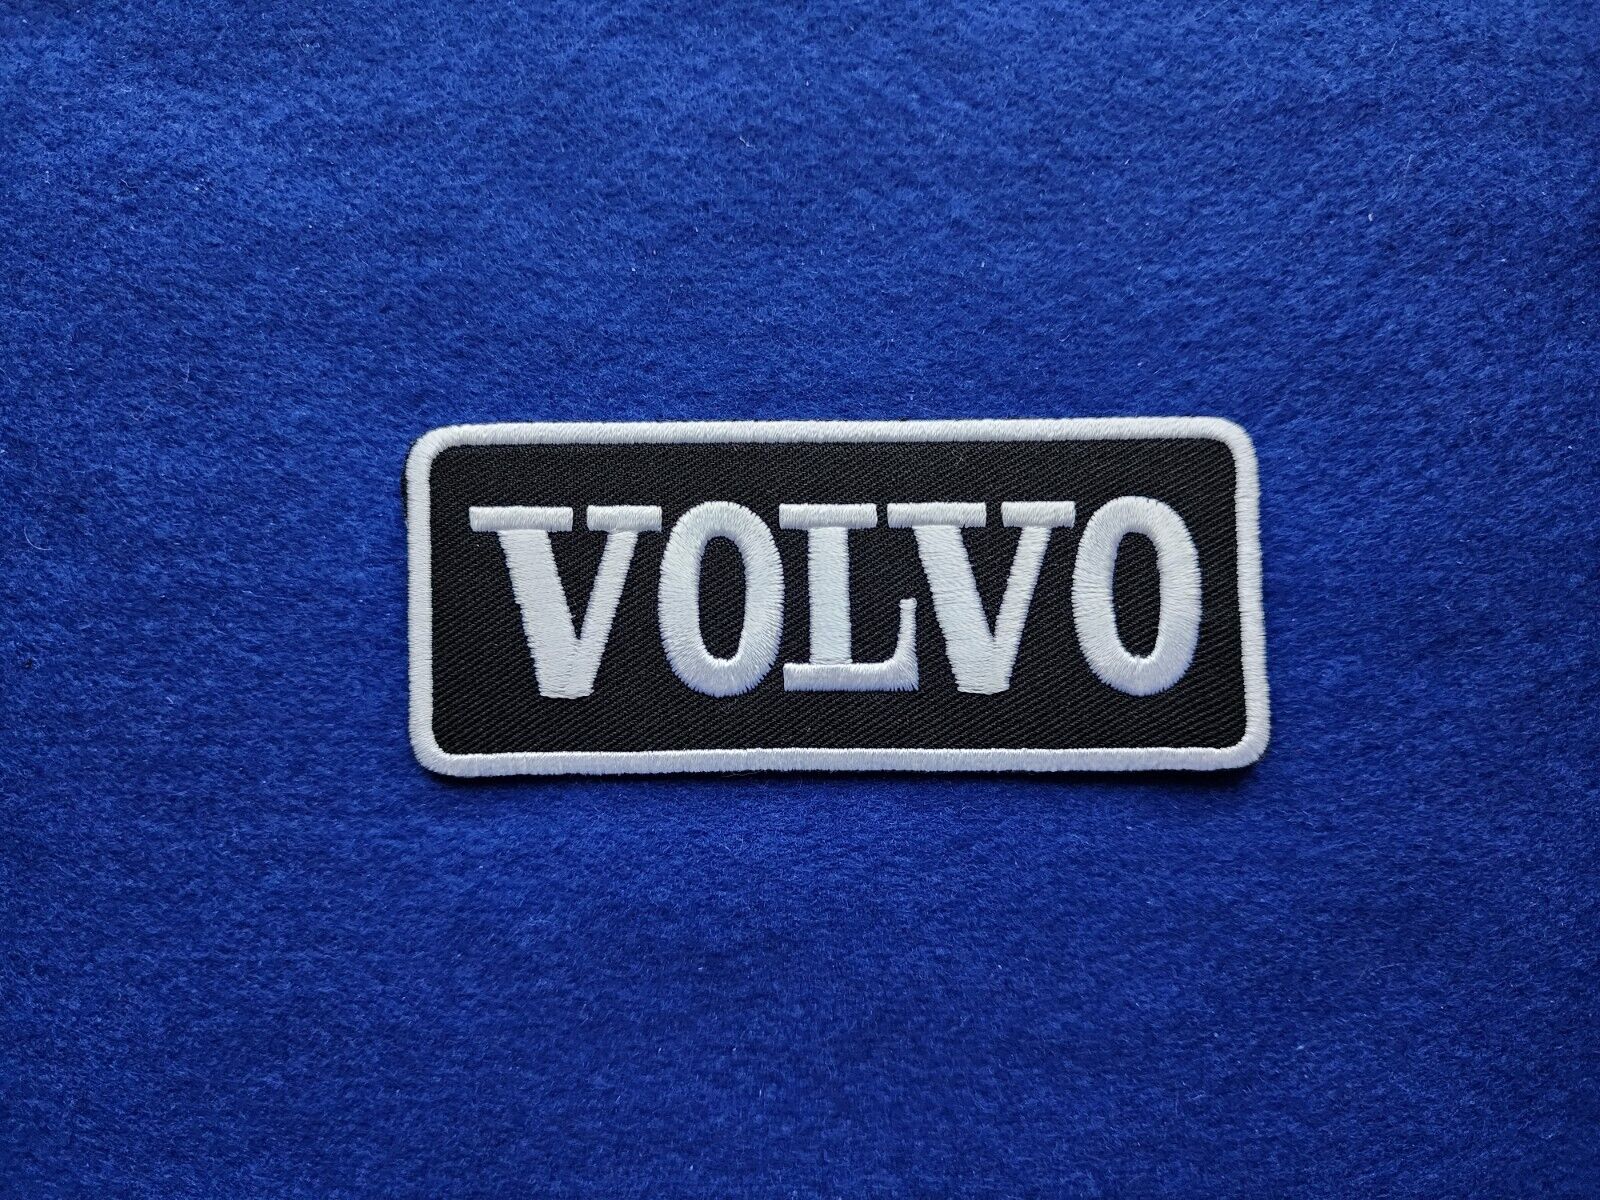 Motorsport Motor Racing Car Badge Sew / Iron on Patch:- Volvo (e)